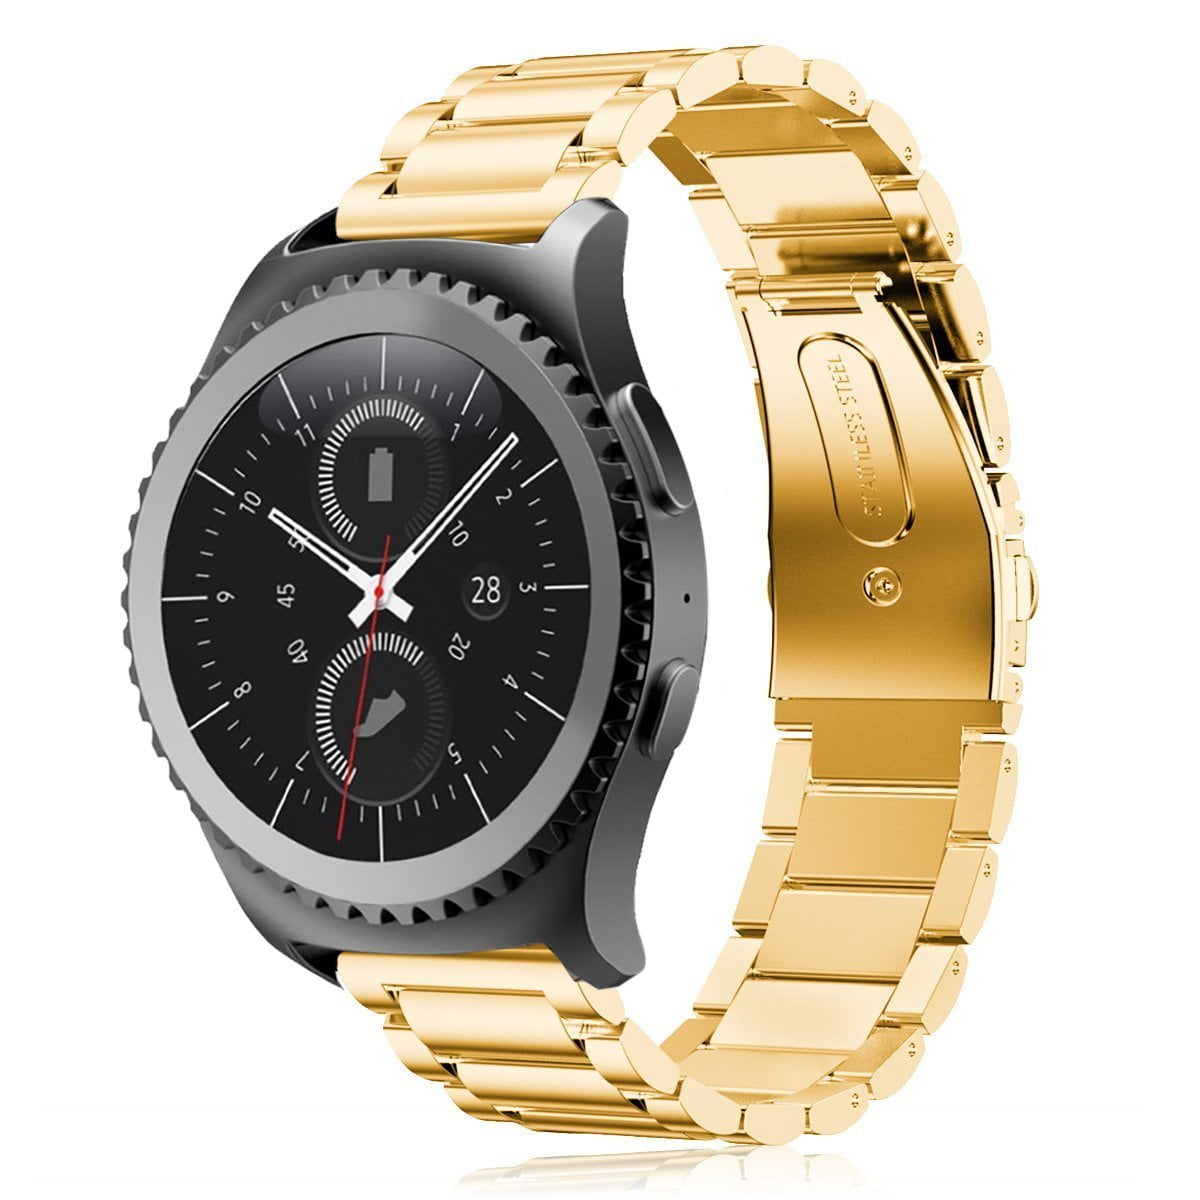 Galaxy watch Classic 42mm золотые. Gear s3 золото. Застежка часов самсунг. Застежка для часов Galaxy watch. Часы самсунг galaxy classic